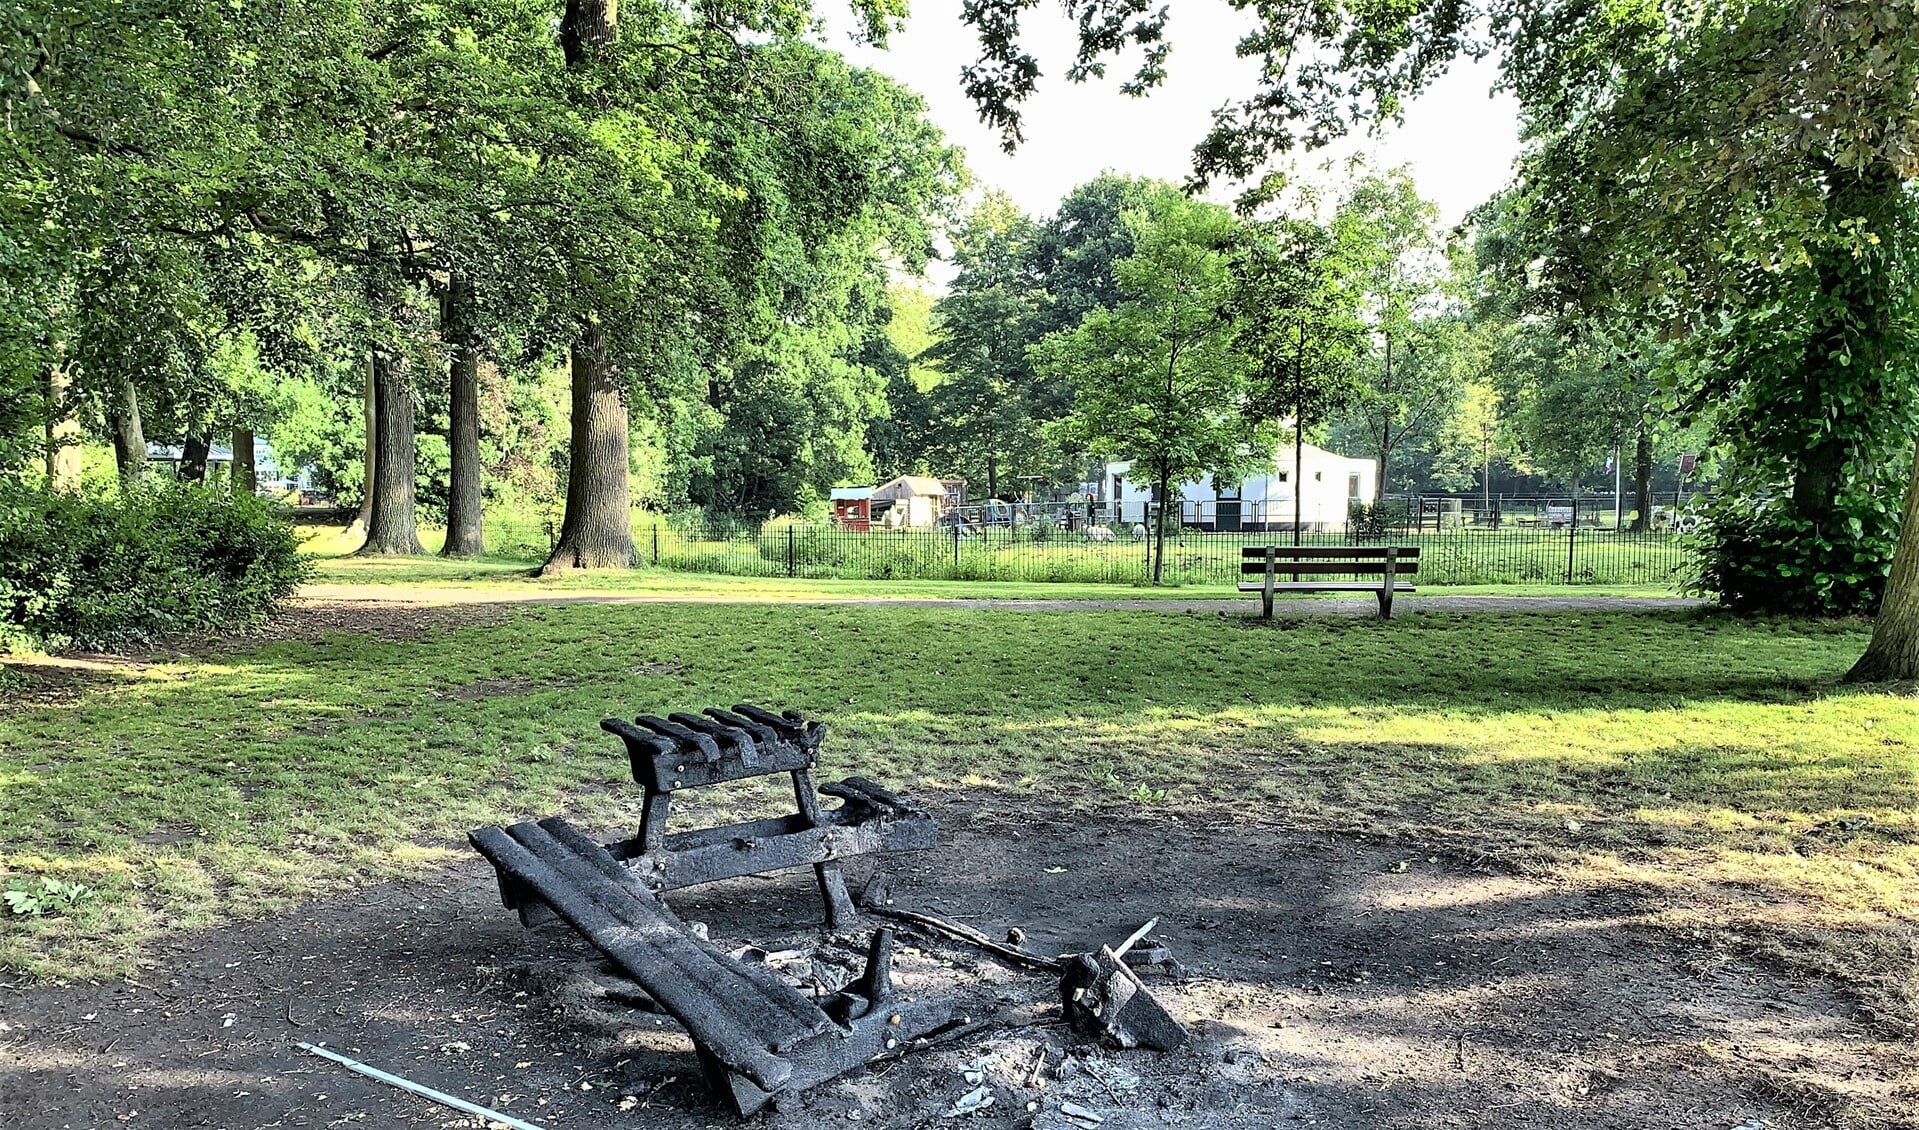 De afgebrande picknicktafel in het park (foto: NivenPress).